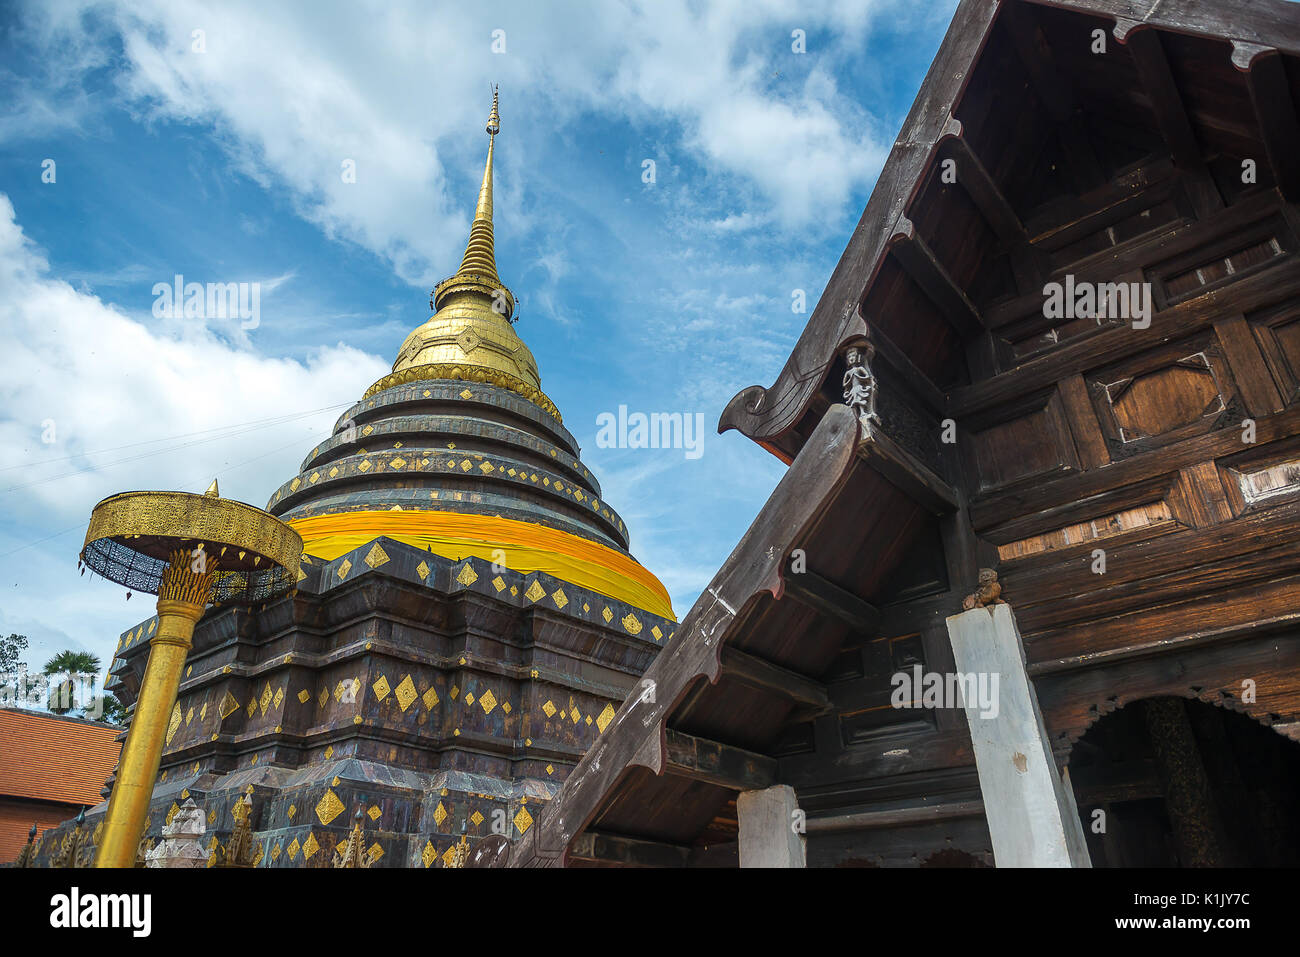 Bellissimo tempio anceint in Thailandia dunring bella giornata Foto Stock